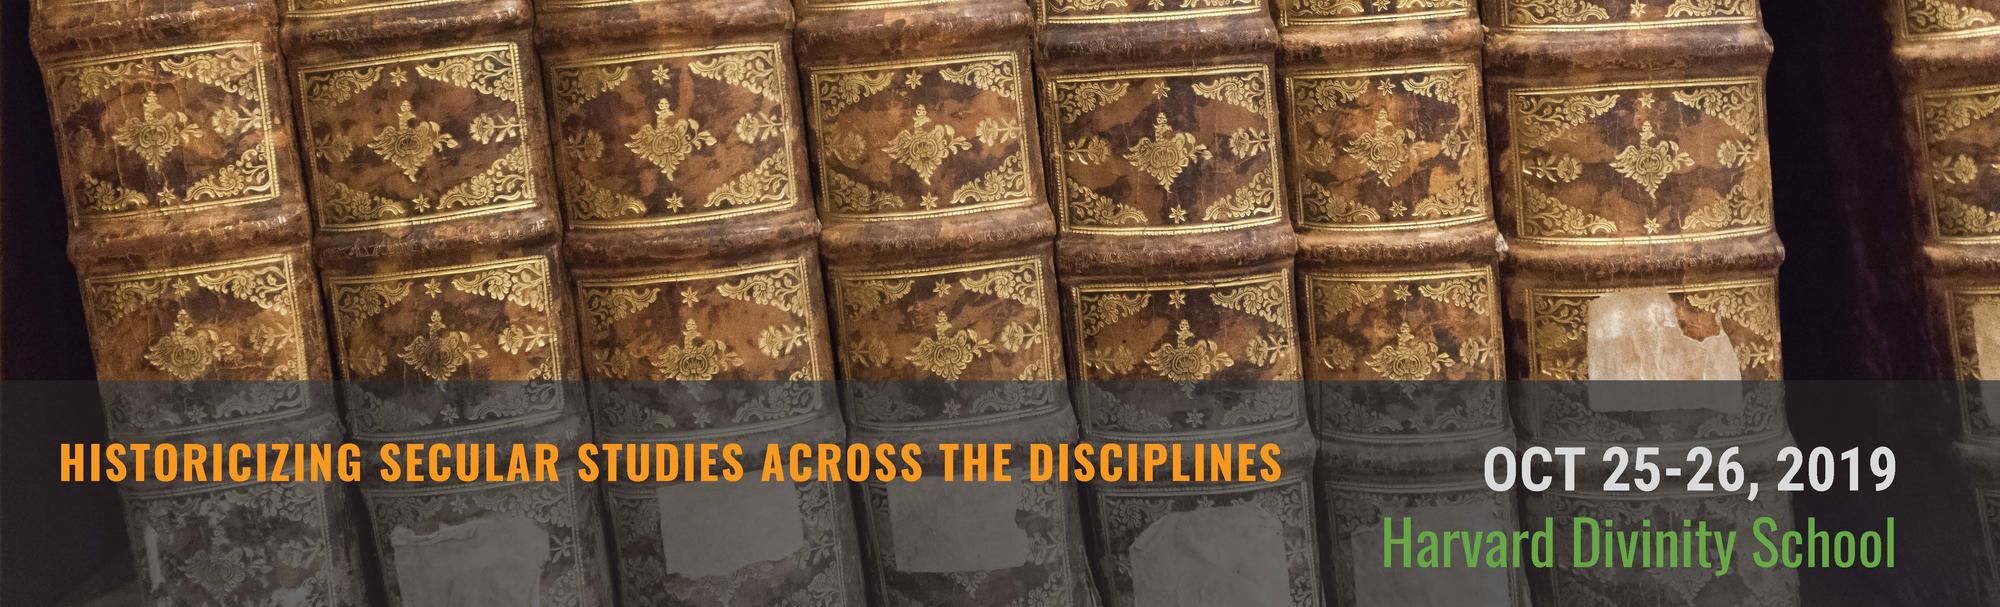 HISTORICIZING SECULAR STUDIES ACROSS THE DISCIPLINES